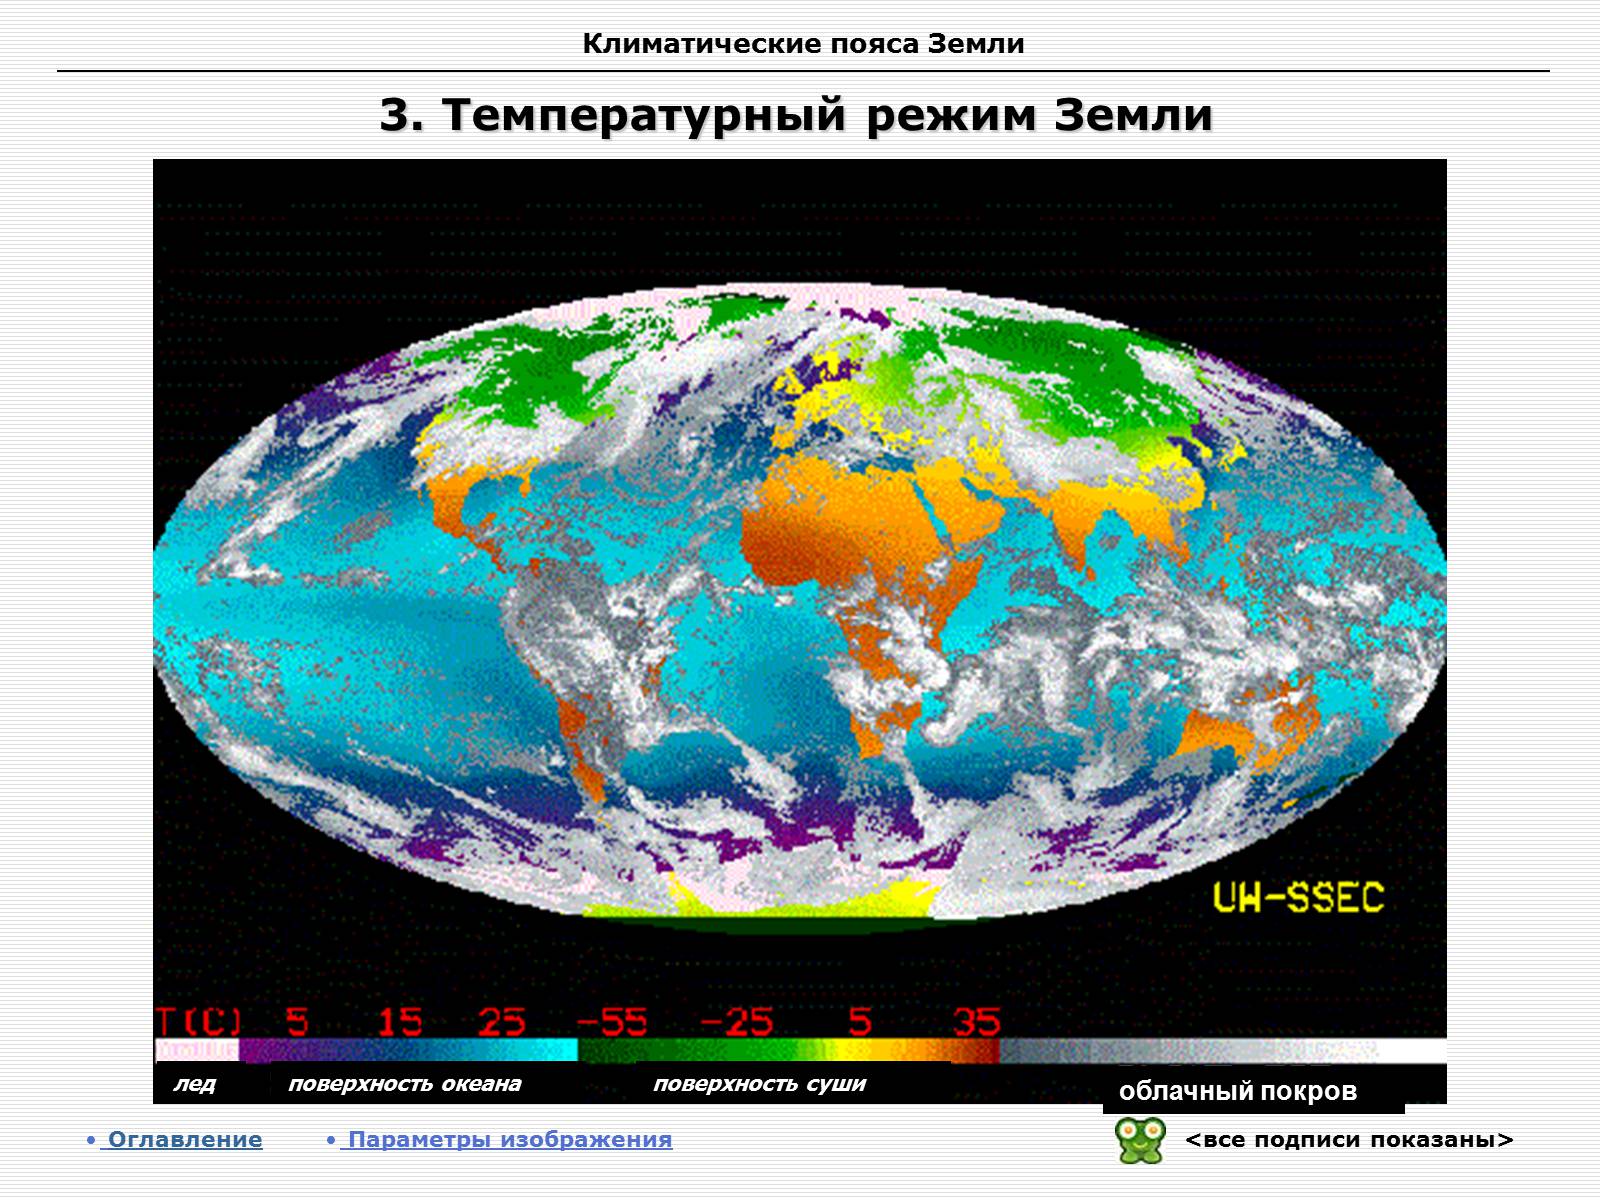 Презентація на тему «Климатические пояса земли» - Слайд #4